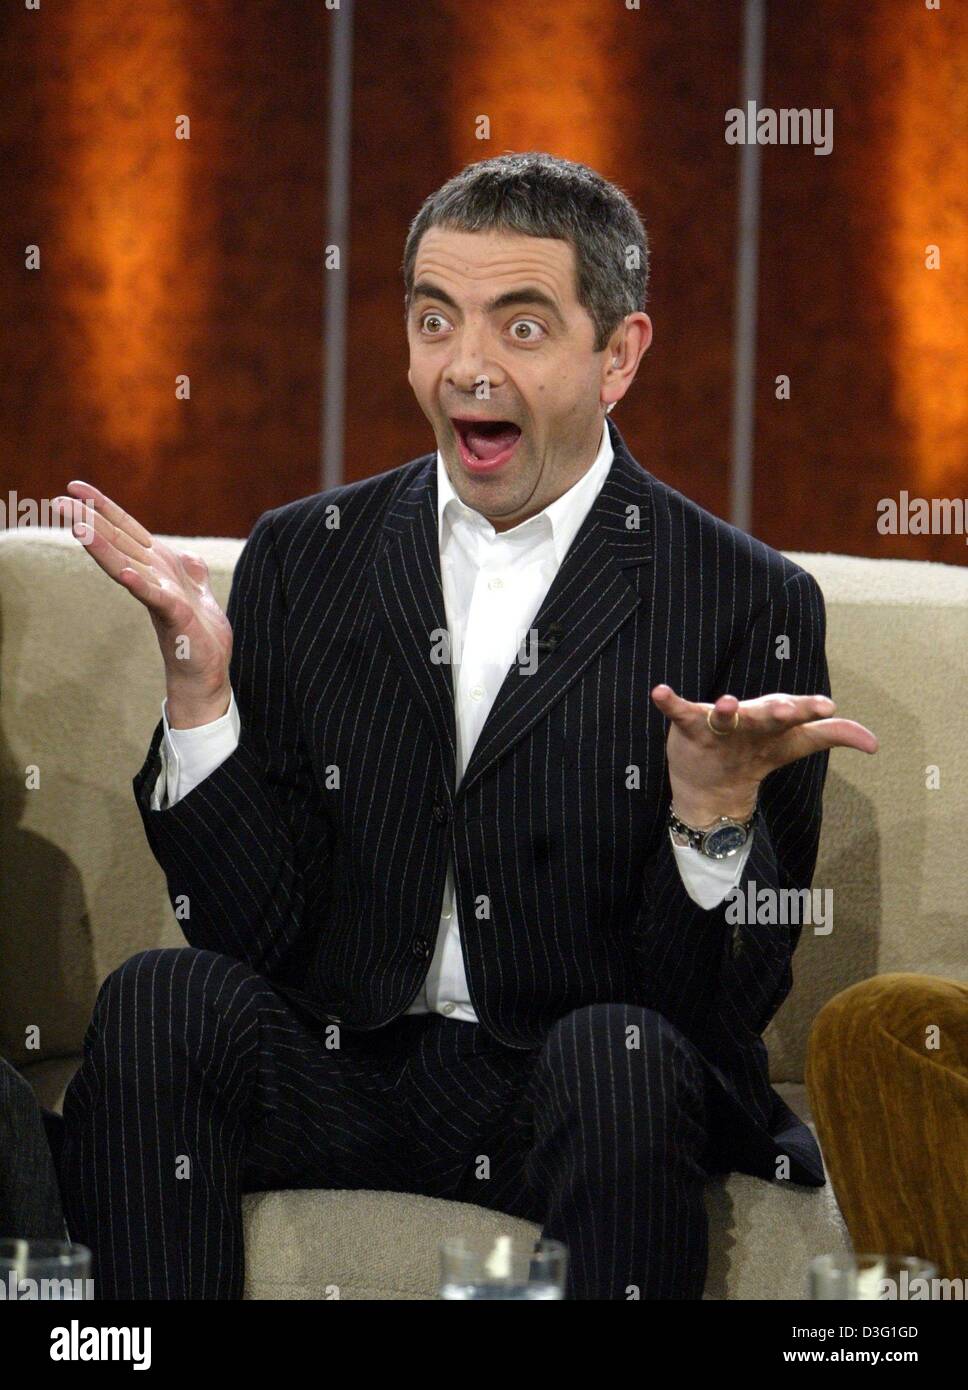 Rowan Atkinson Mr Bean Face